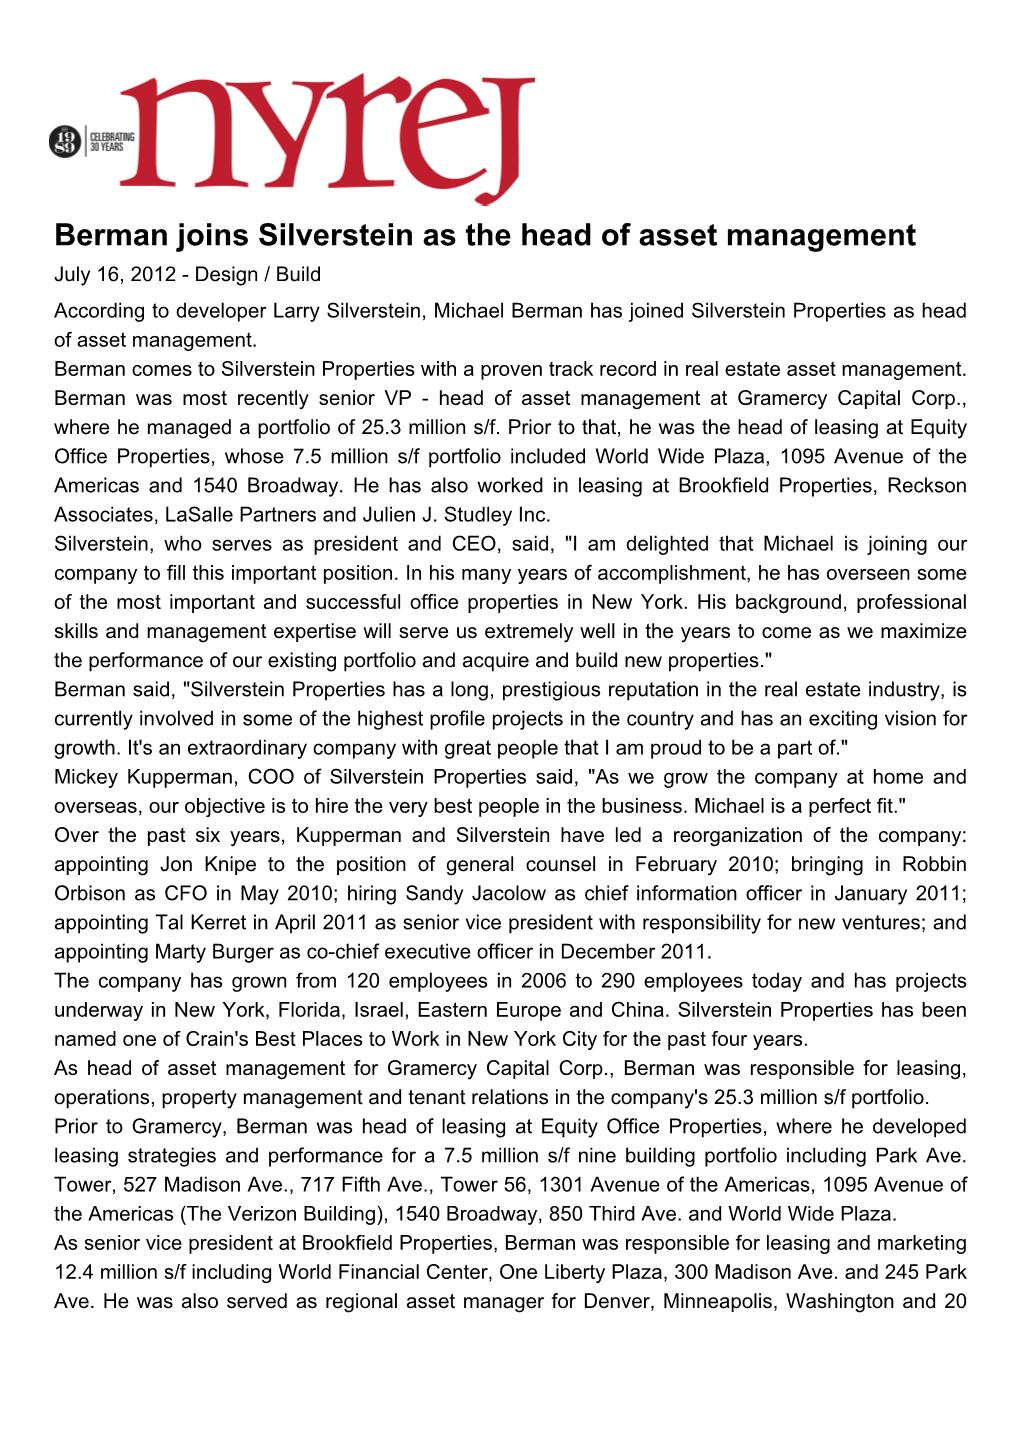 Berman Joins Silverstein As the Head of Asset Management